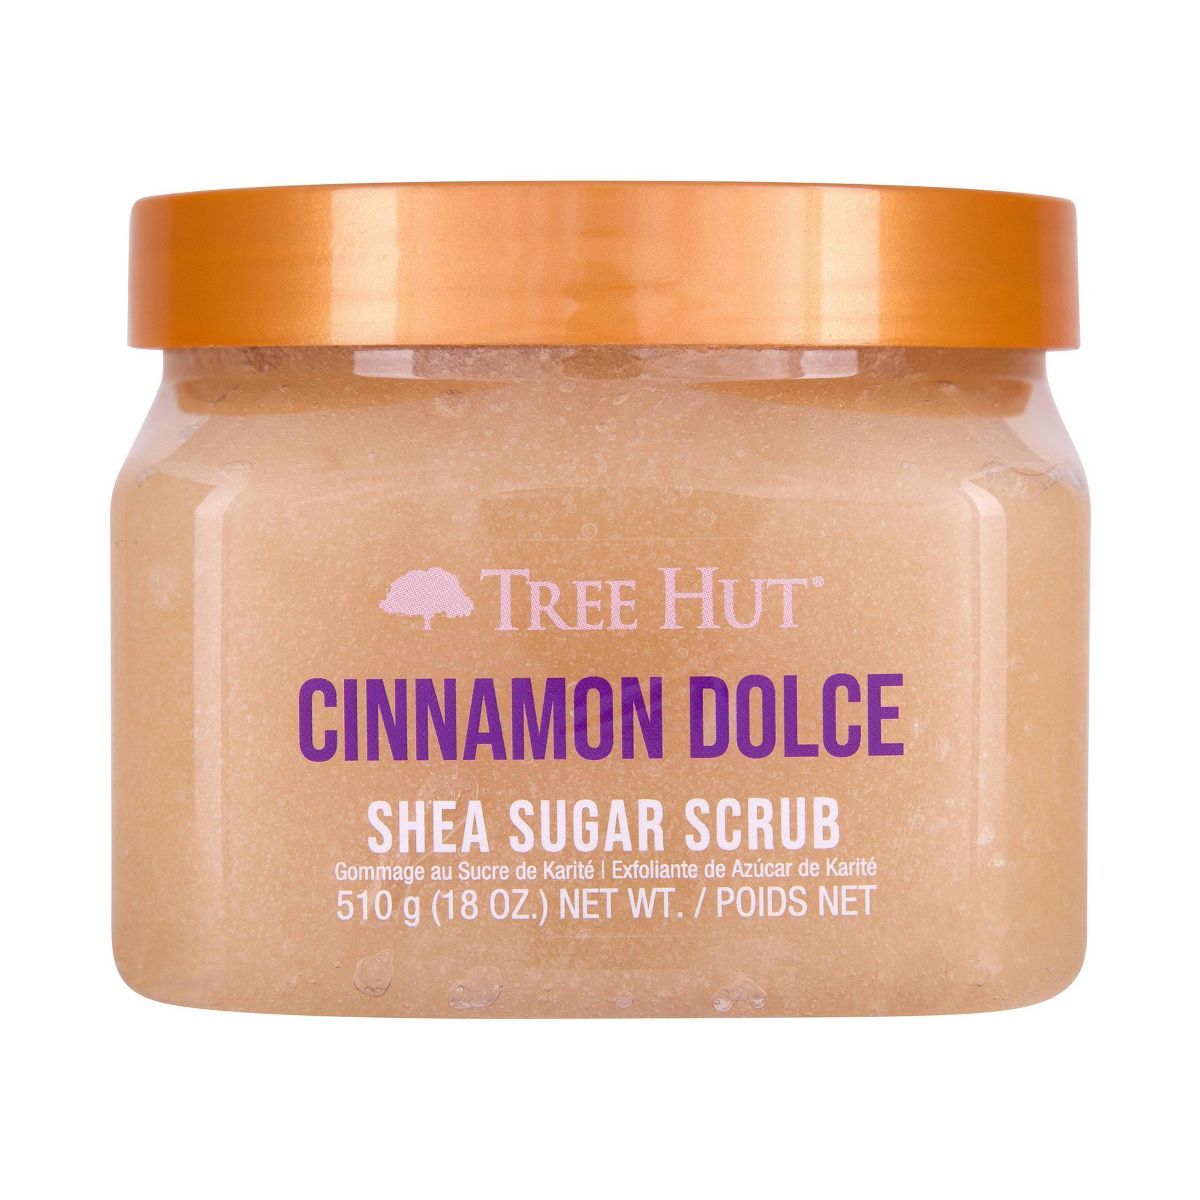 Tree Hut Cinnamon Dolce Shea Sugar & Almond Body Scrub - 18oz | Target